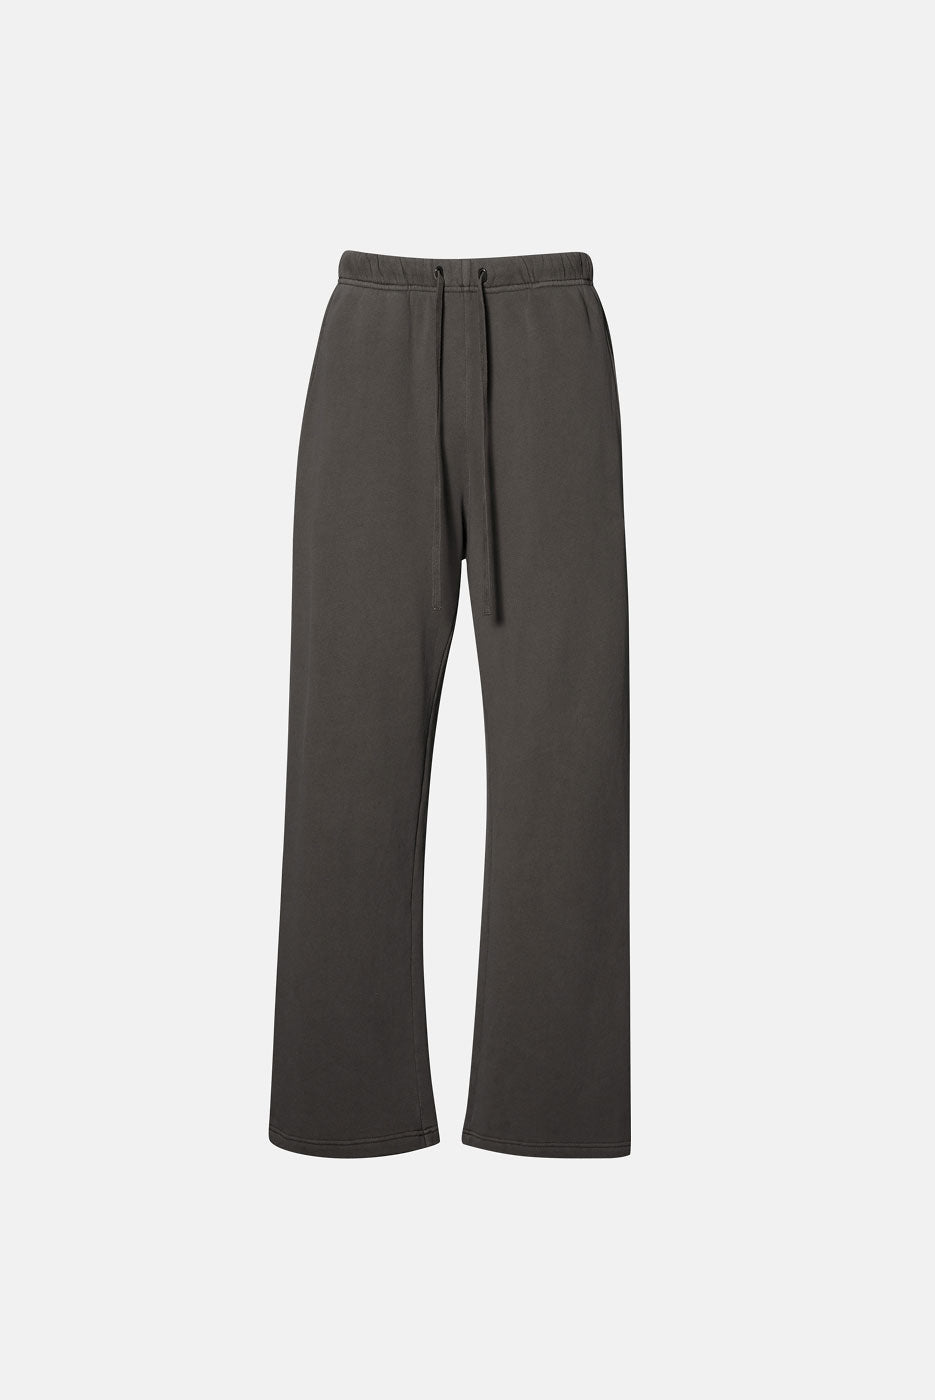 Shop Sweatpants – Elwood Clothing